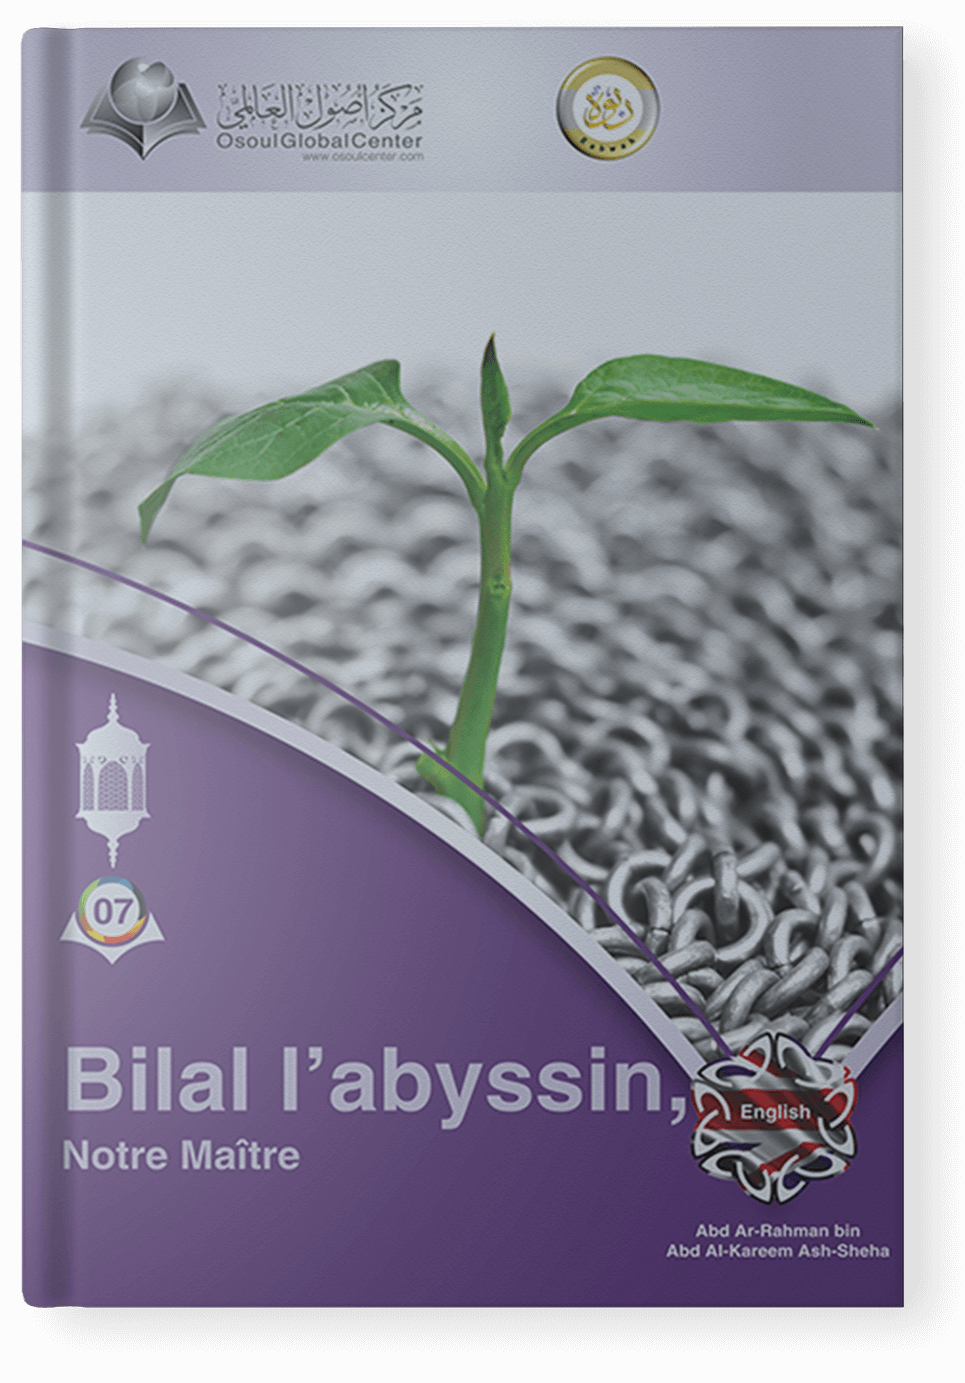 Bilal l’abyssin, Notre Maître… : One light, many colors by Abdulrahman bin Abdul kareem Al Sheha